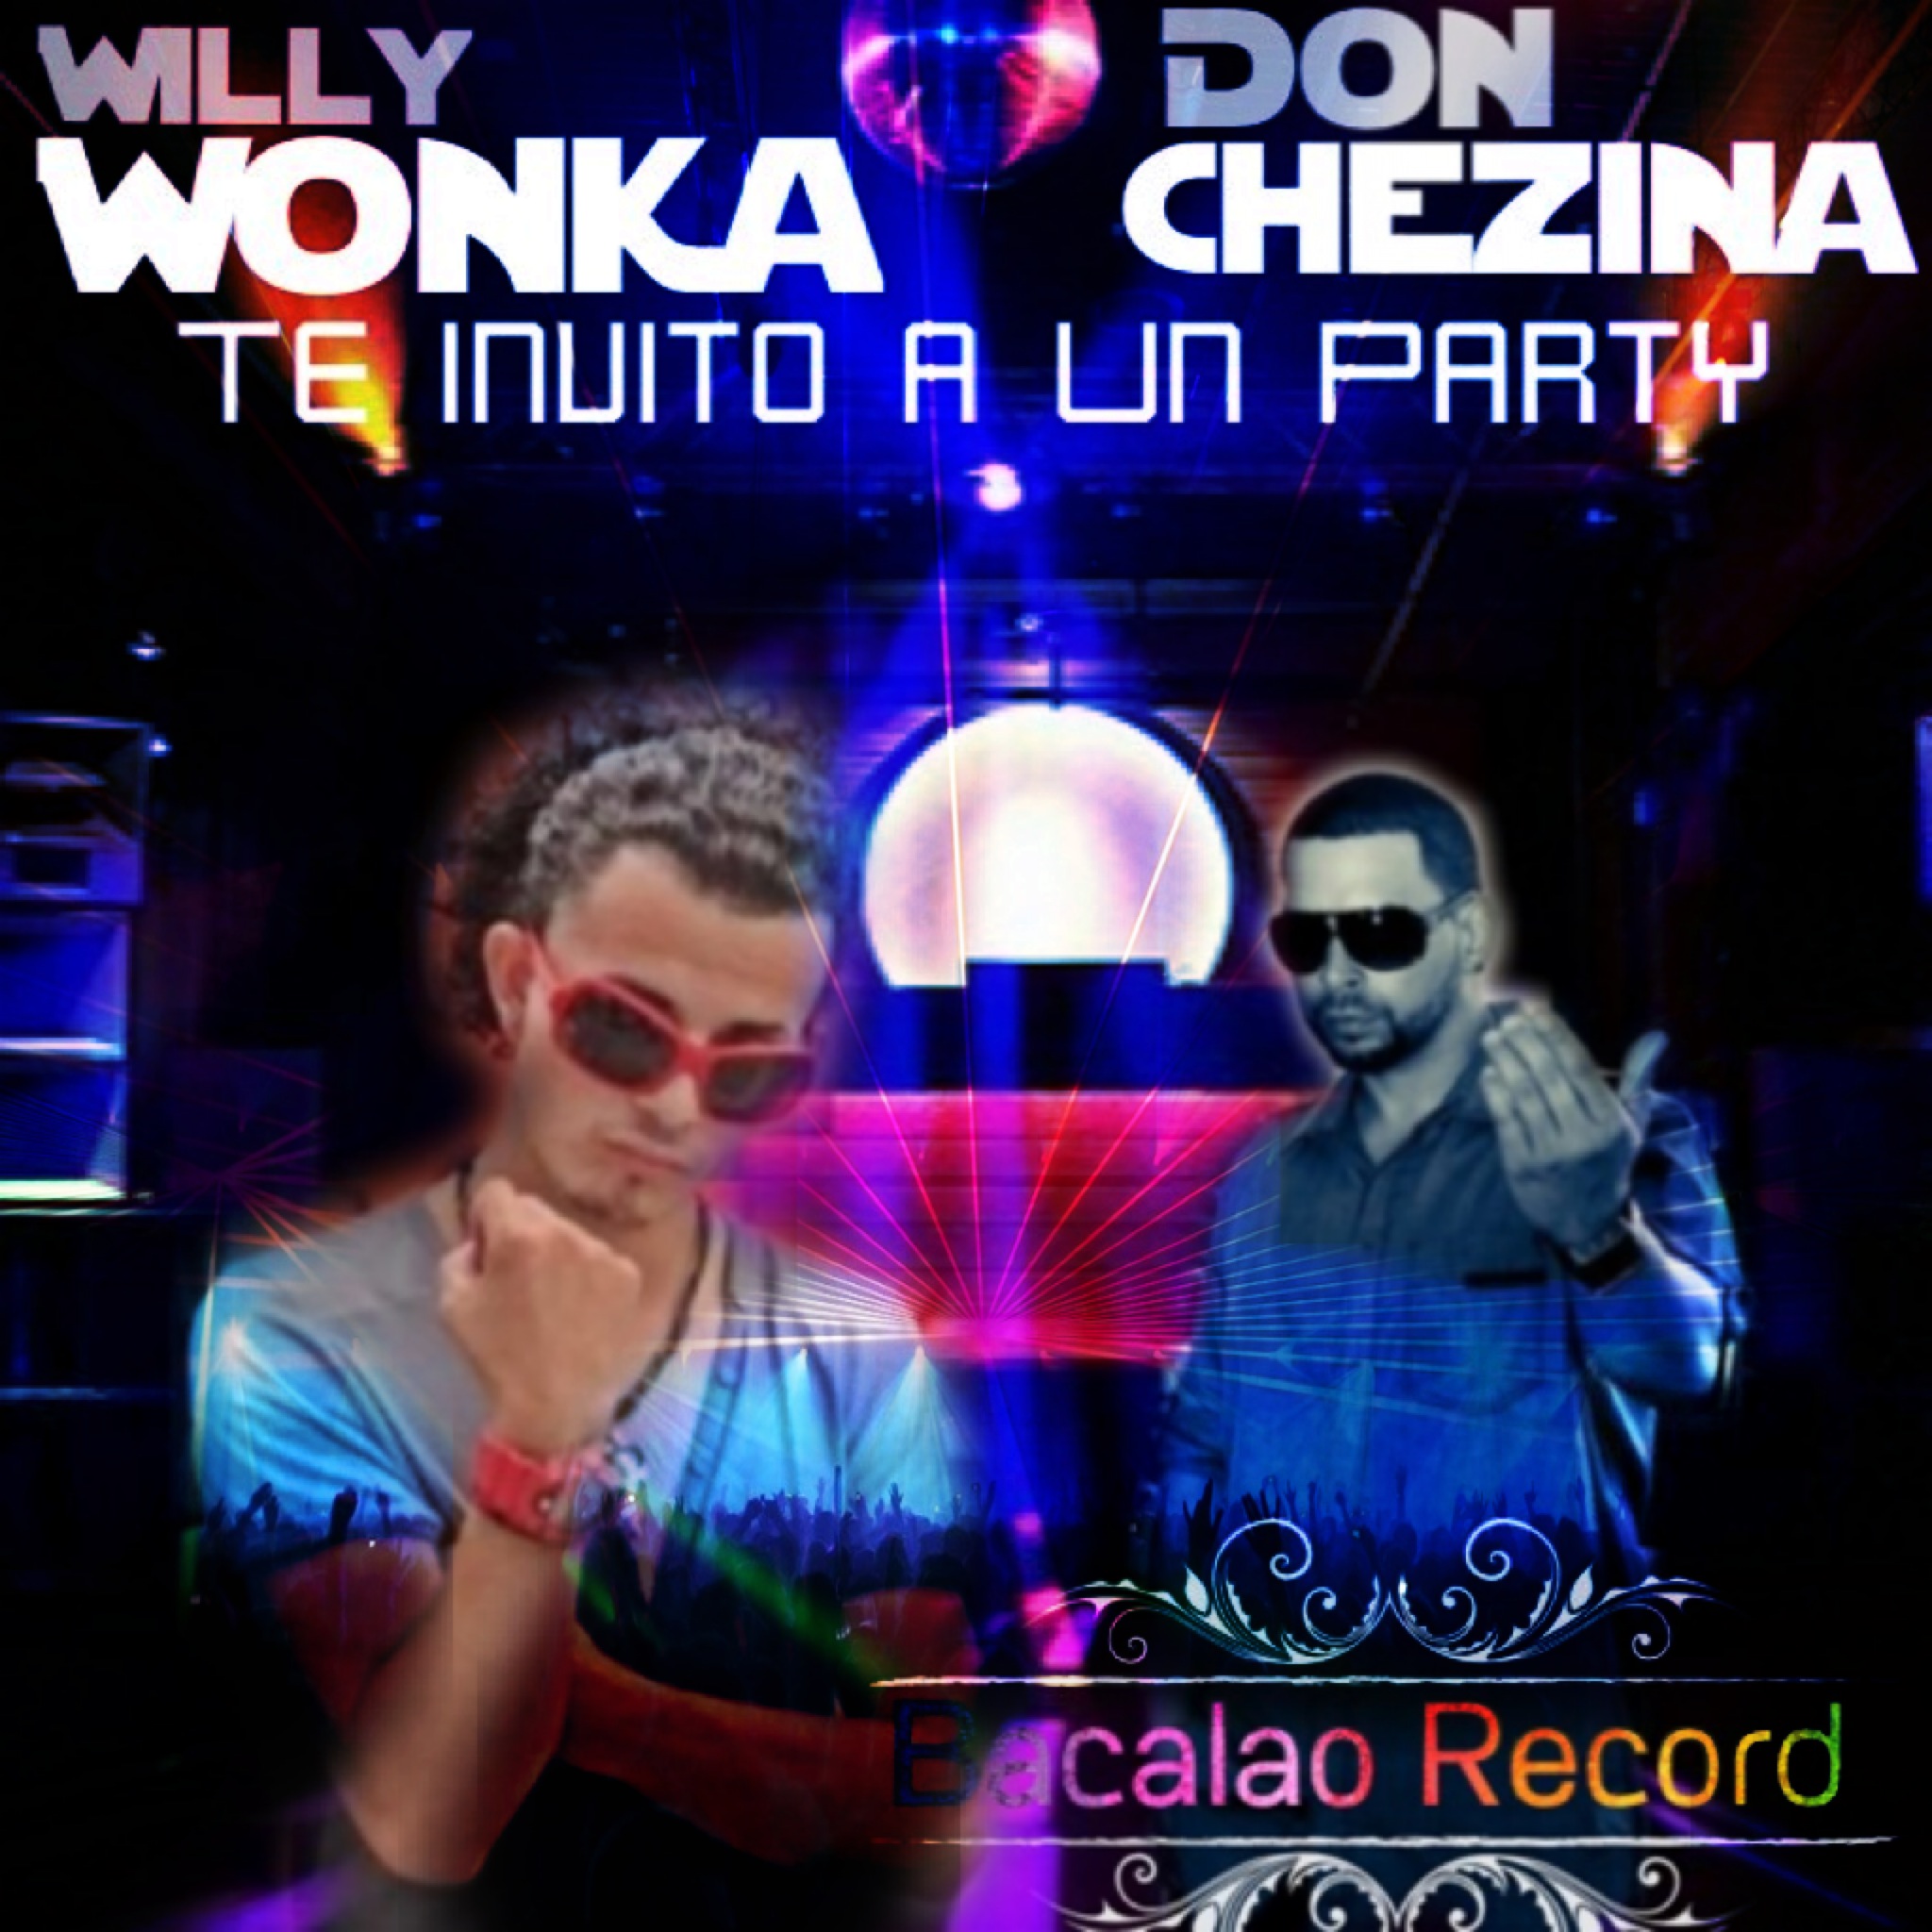 PREMIERE: Don Chezina Ft. Willy Wonka – Te Invito A Un Party [EXCLUSIVE]